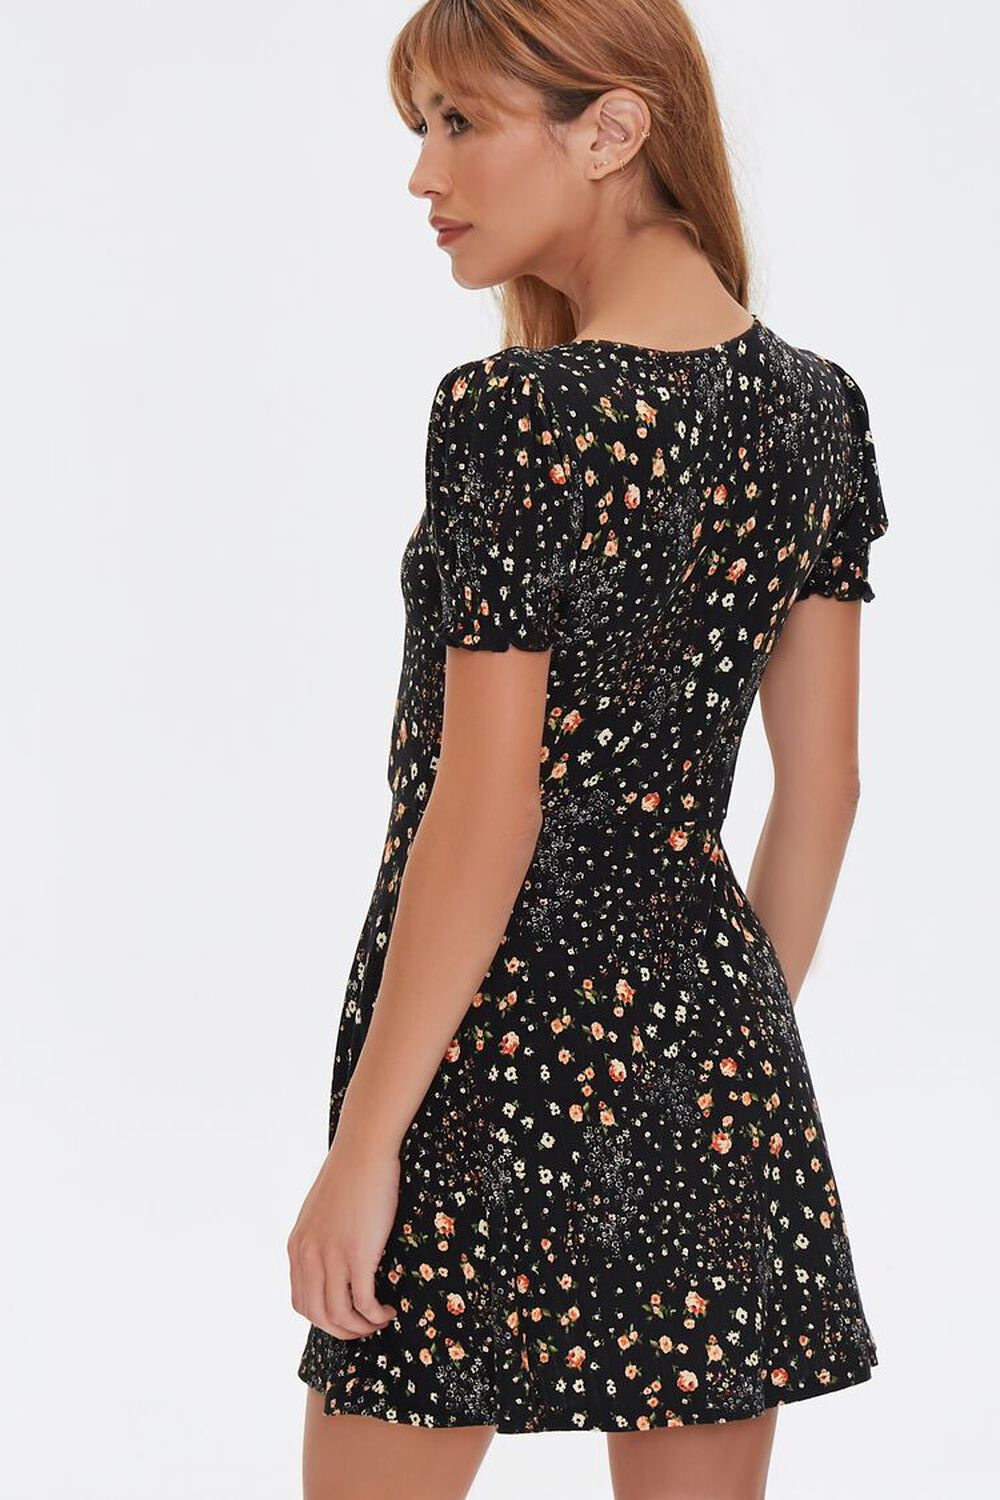 BLACK/MULTI Floral Fit & Flare Mini Dress, image 3